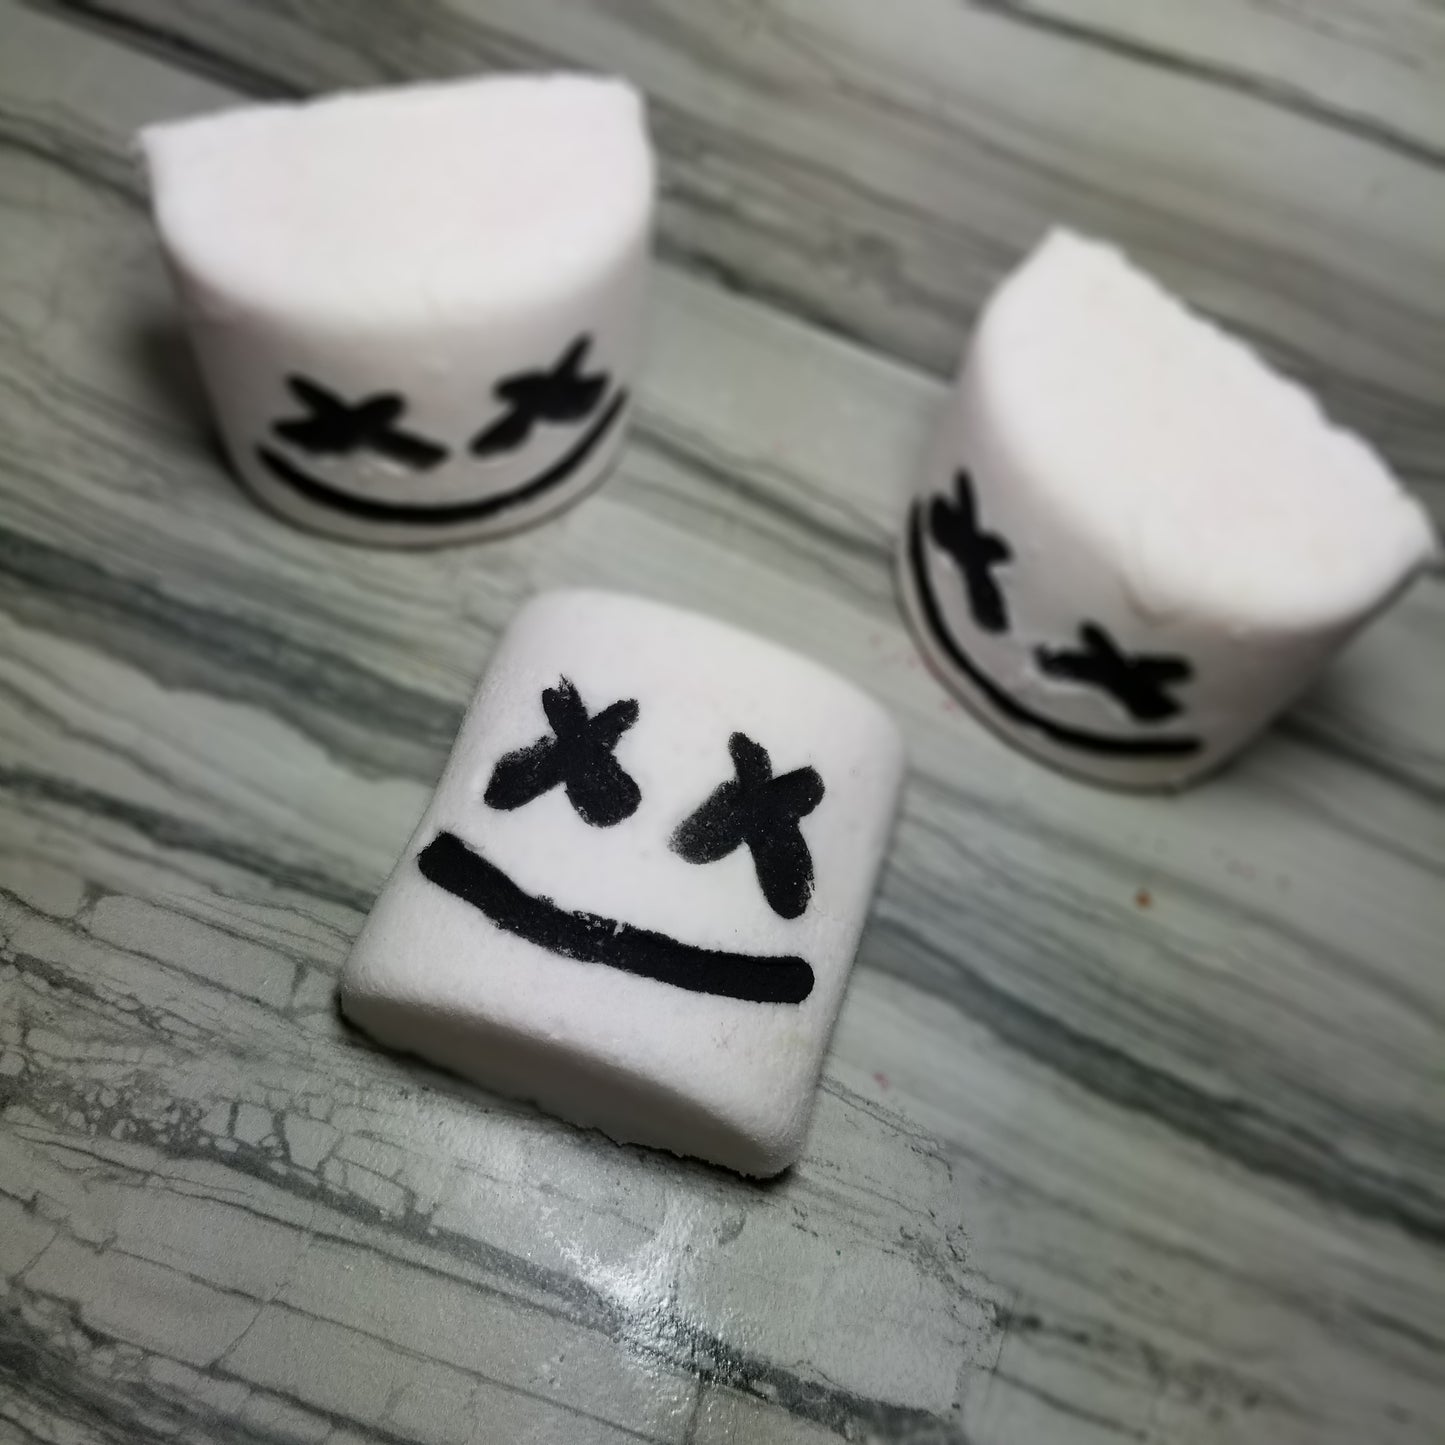 Marshmallow face bath bomb